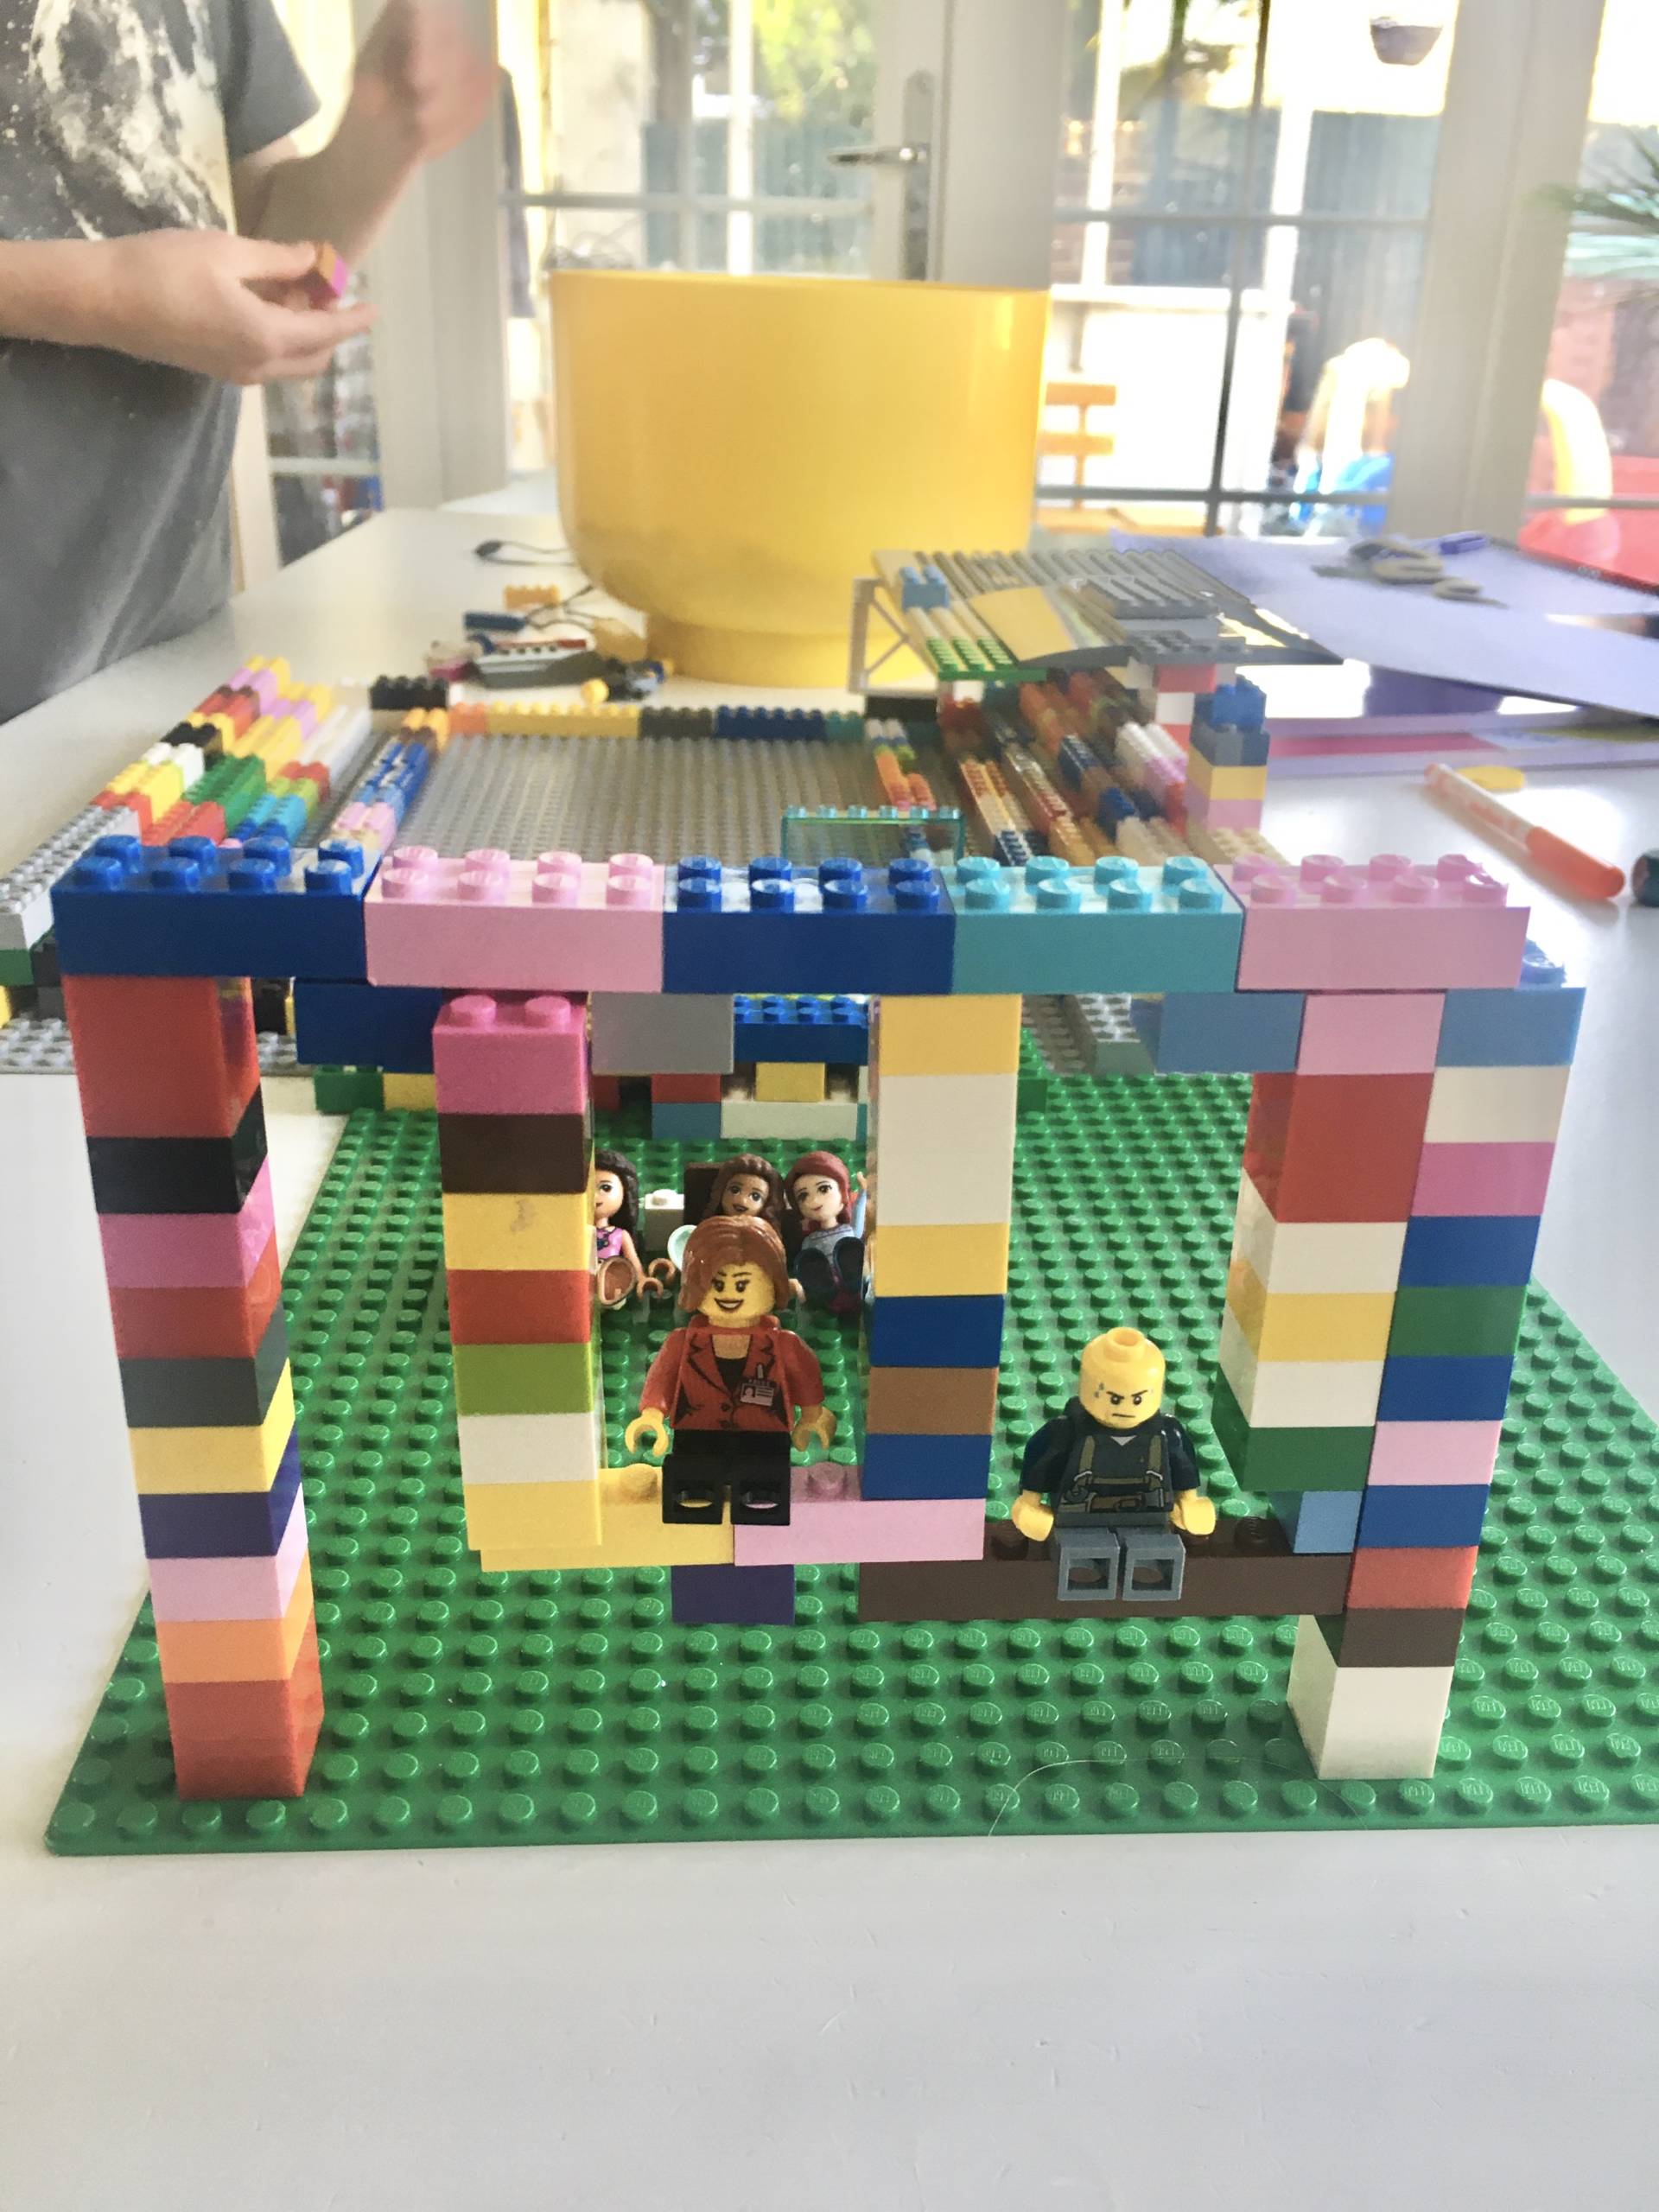 Lego playground for Lego challenge